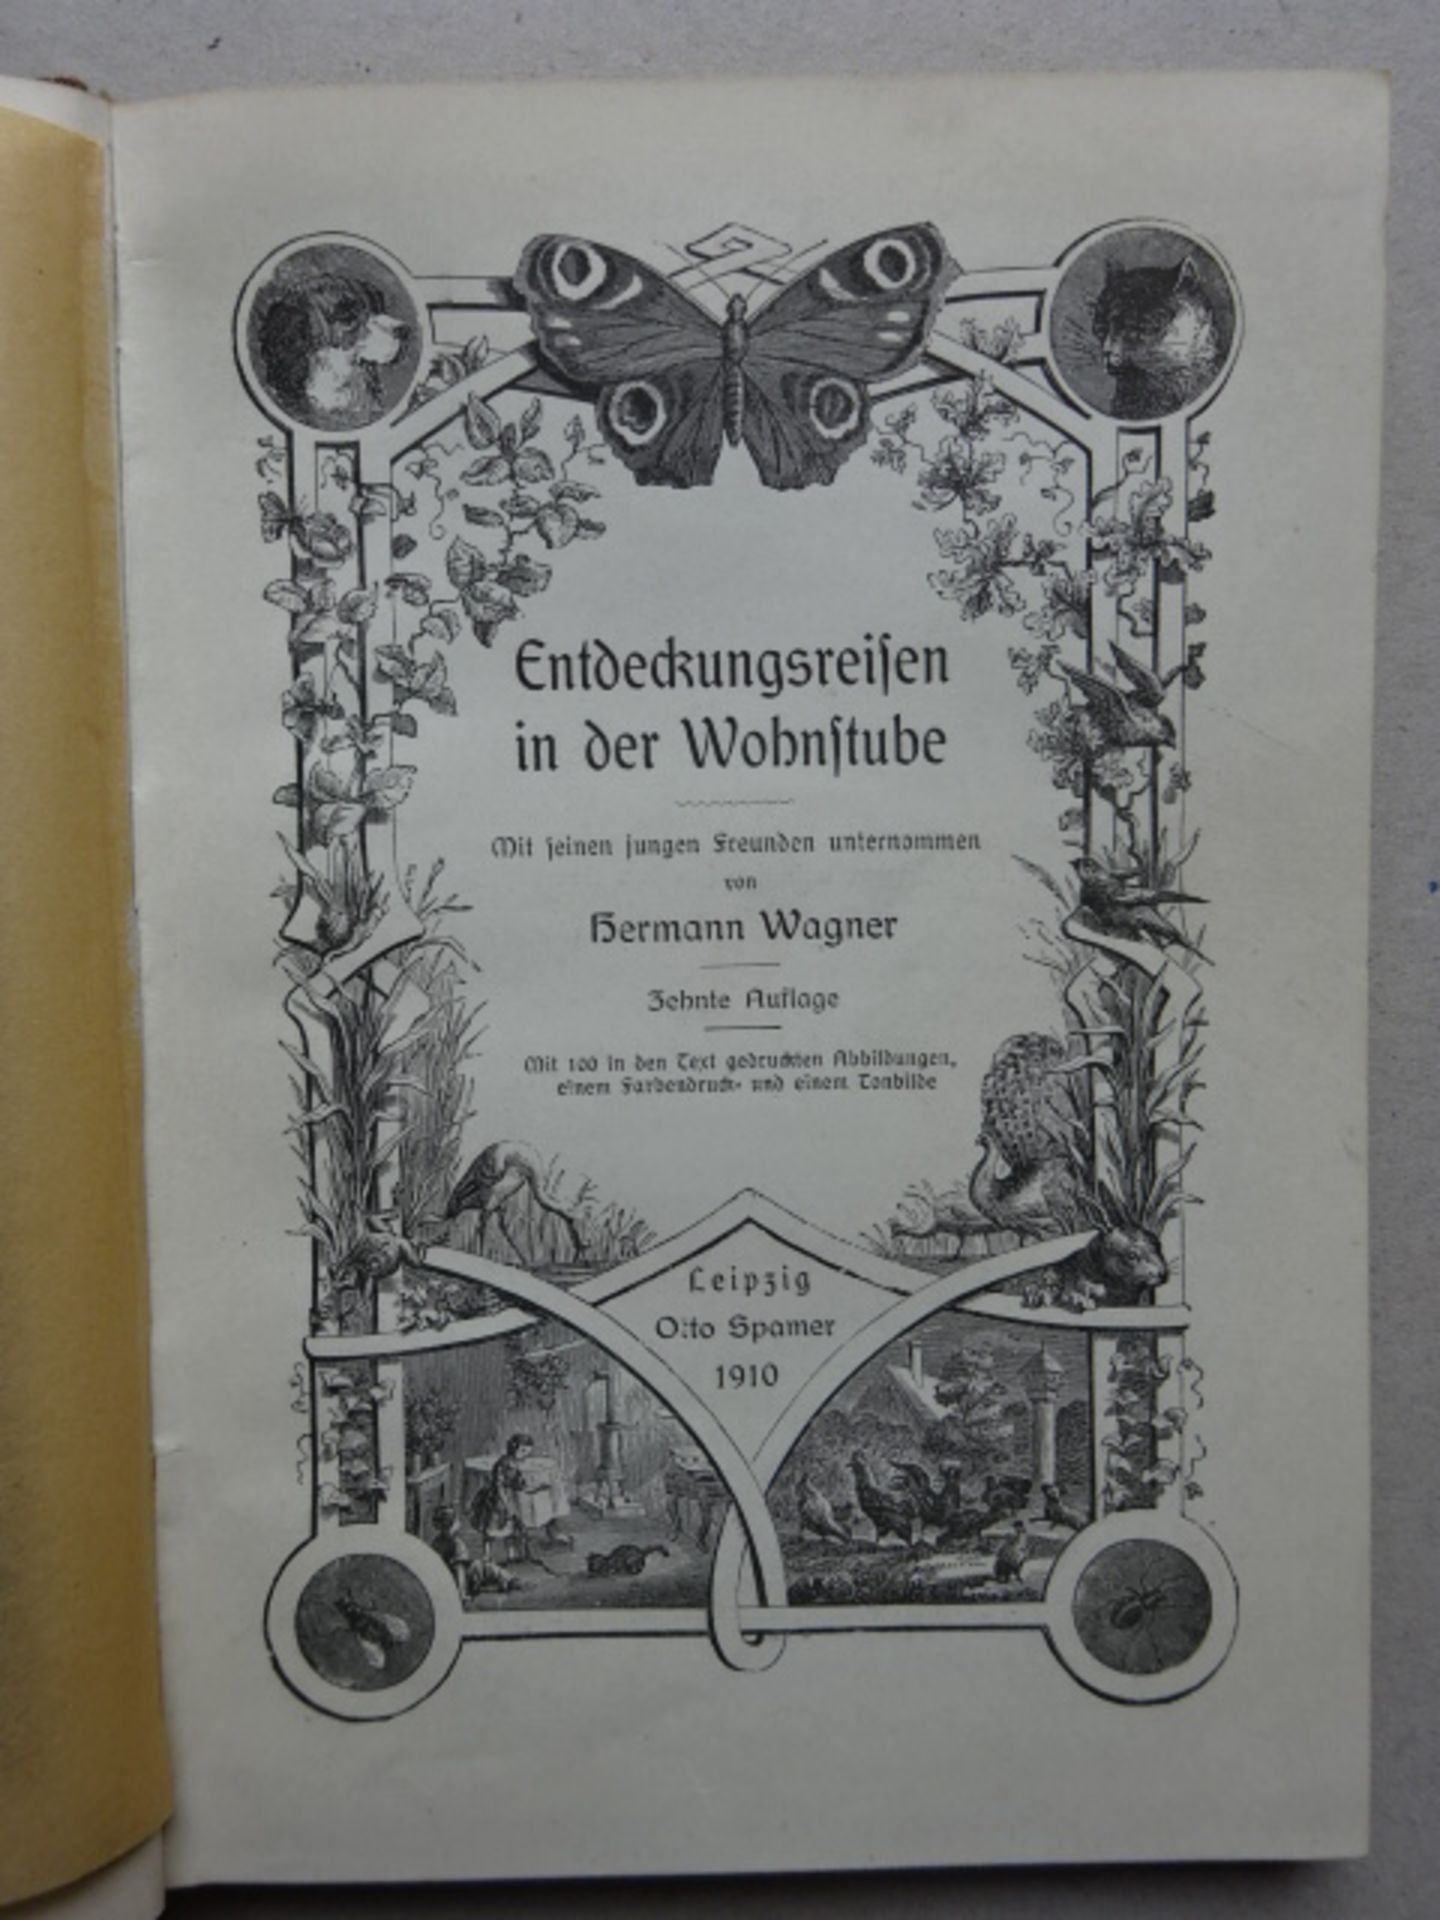 Wagner - Entdeckungsreisen - Image 2 of 7